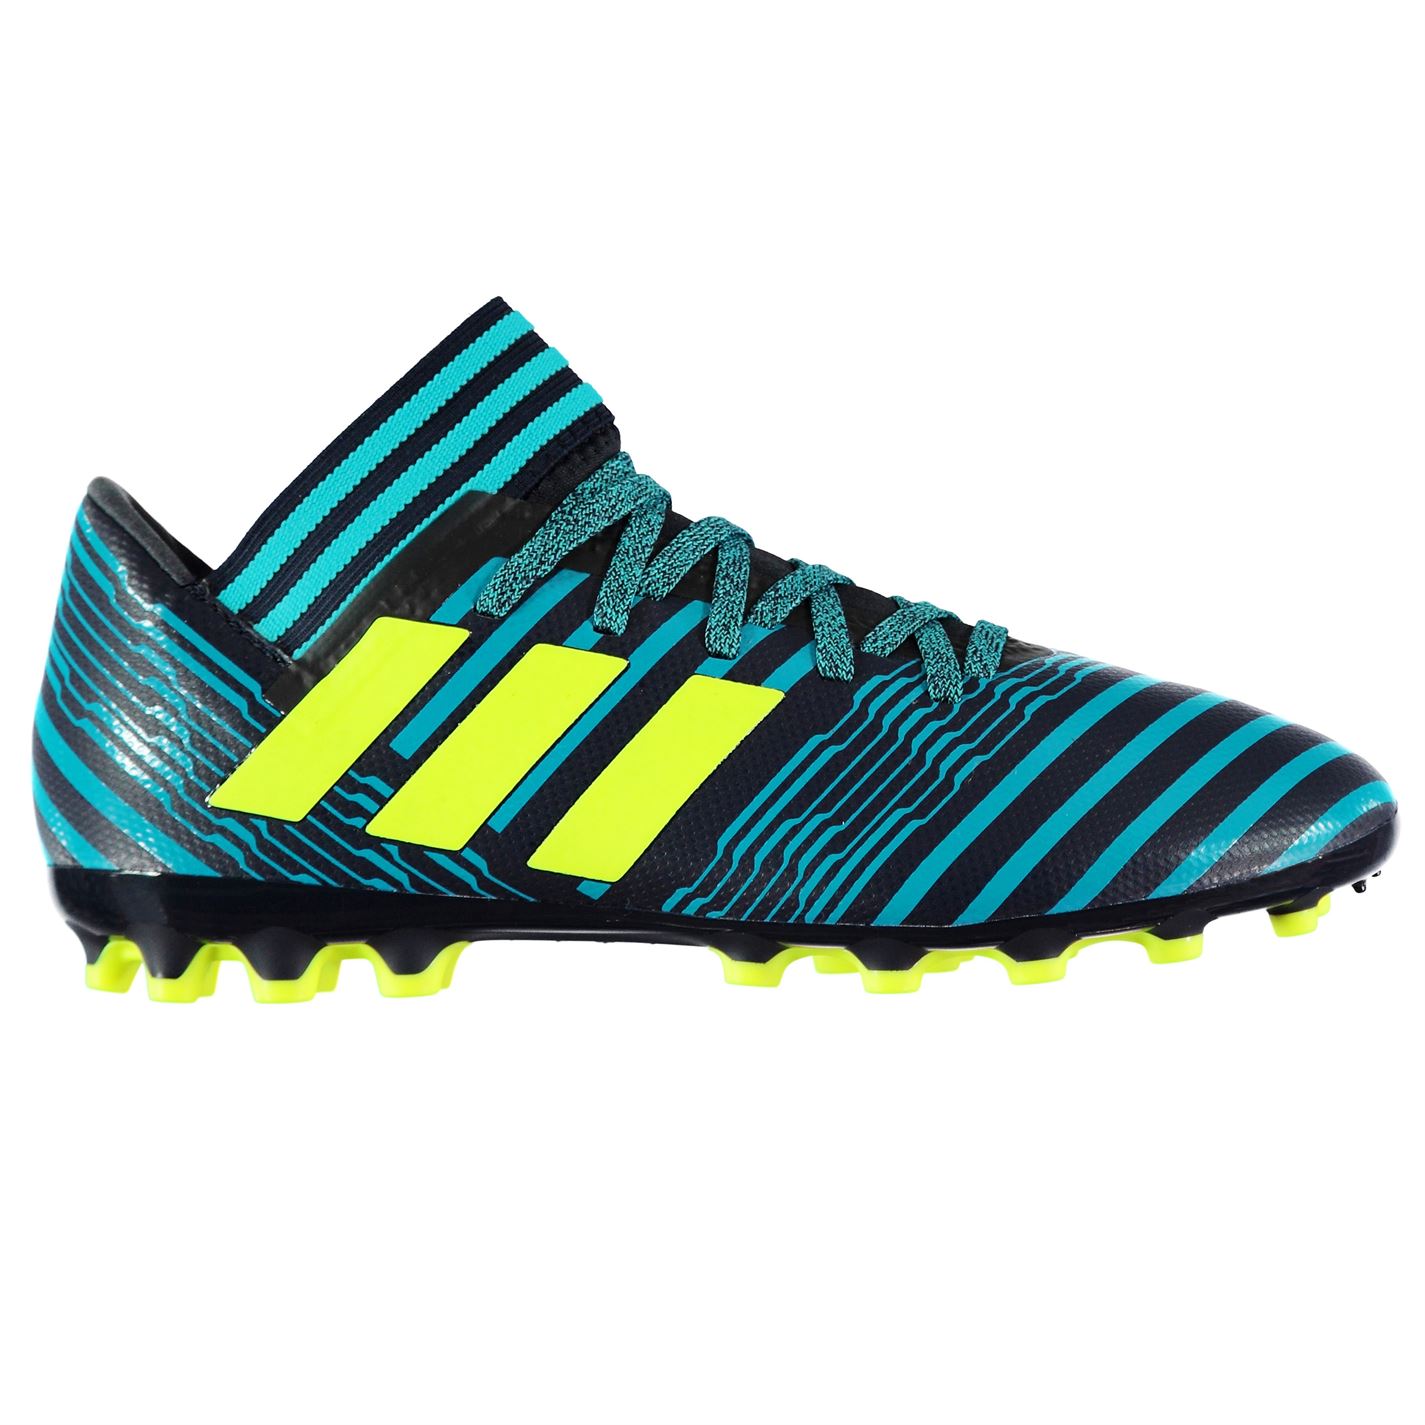 Adidas Nemeziz 17.3 AG Junior Football Boots